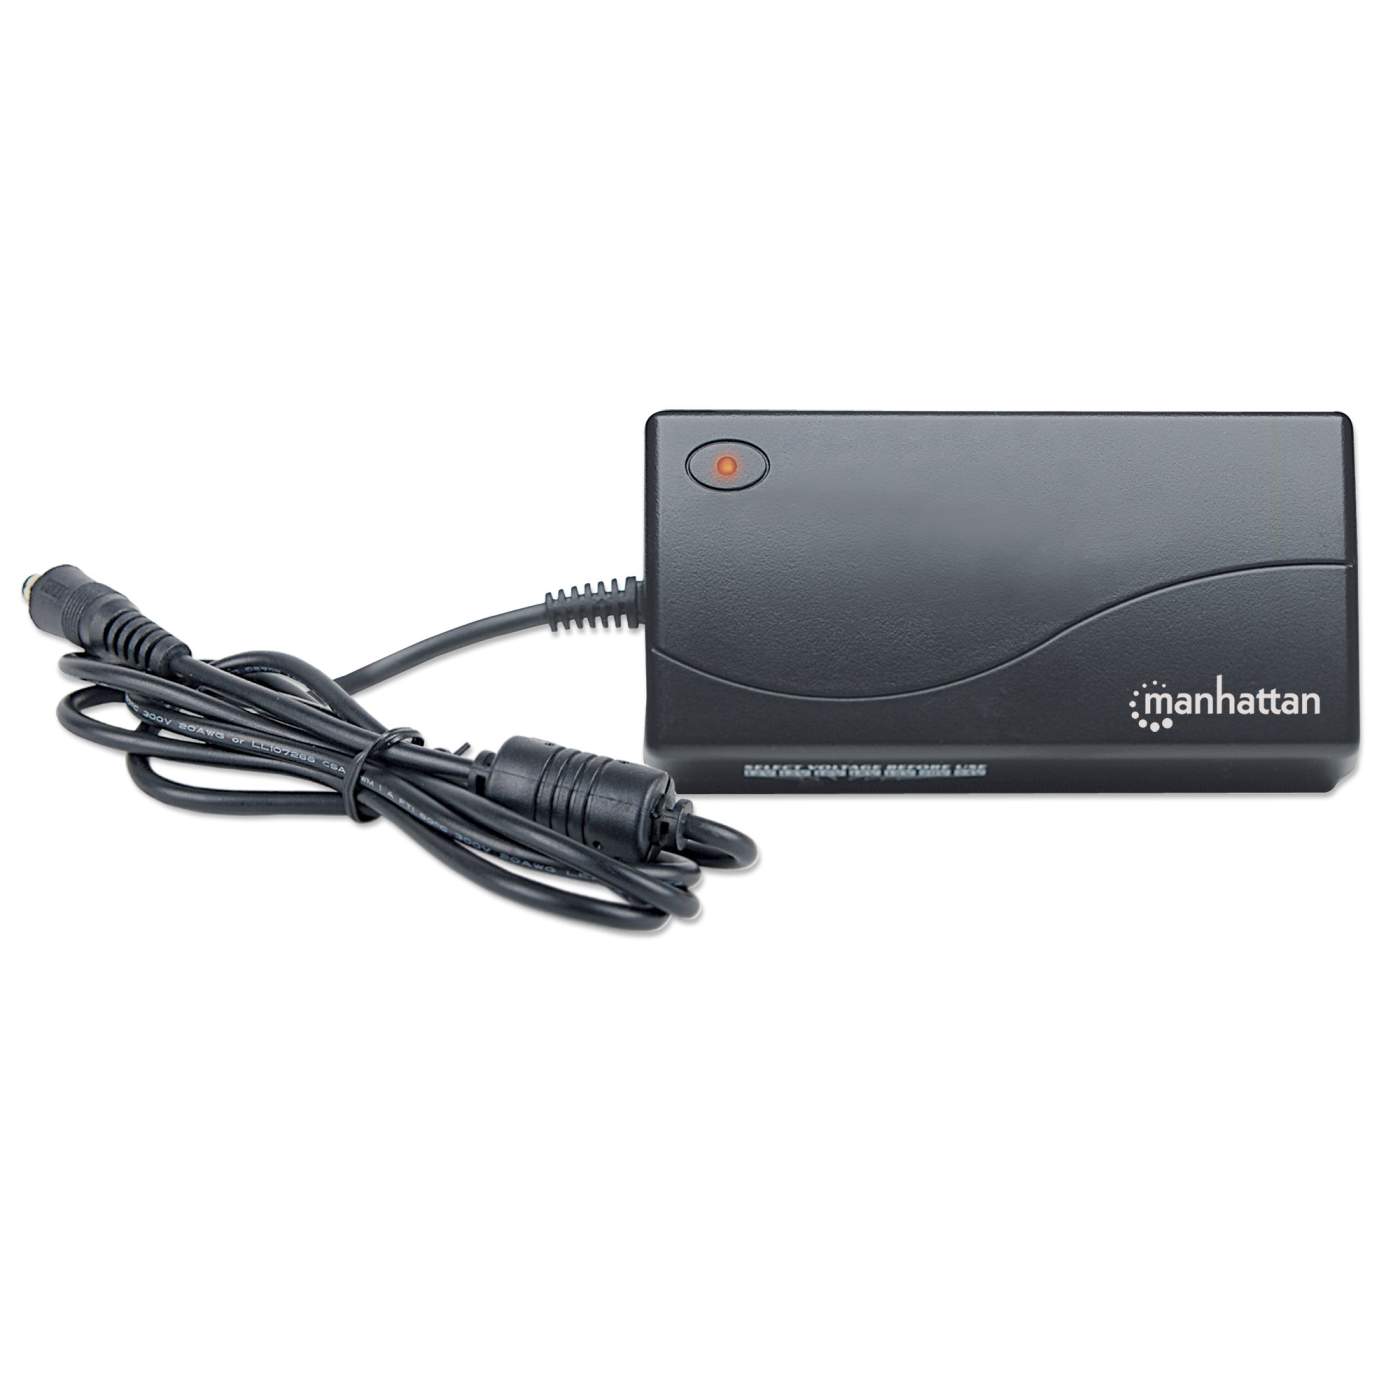 Cargador transformador universal para Notebook Laptop voltage seleccionable  4-4.5A SHH-96W Computaci